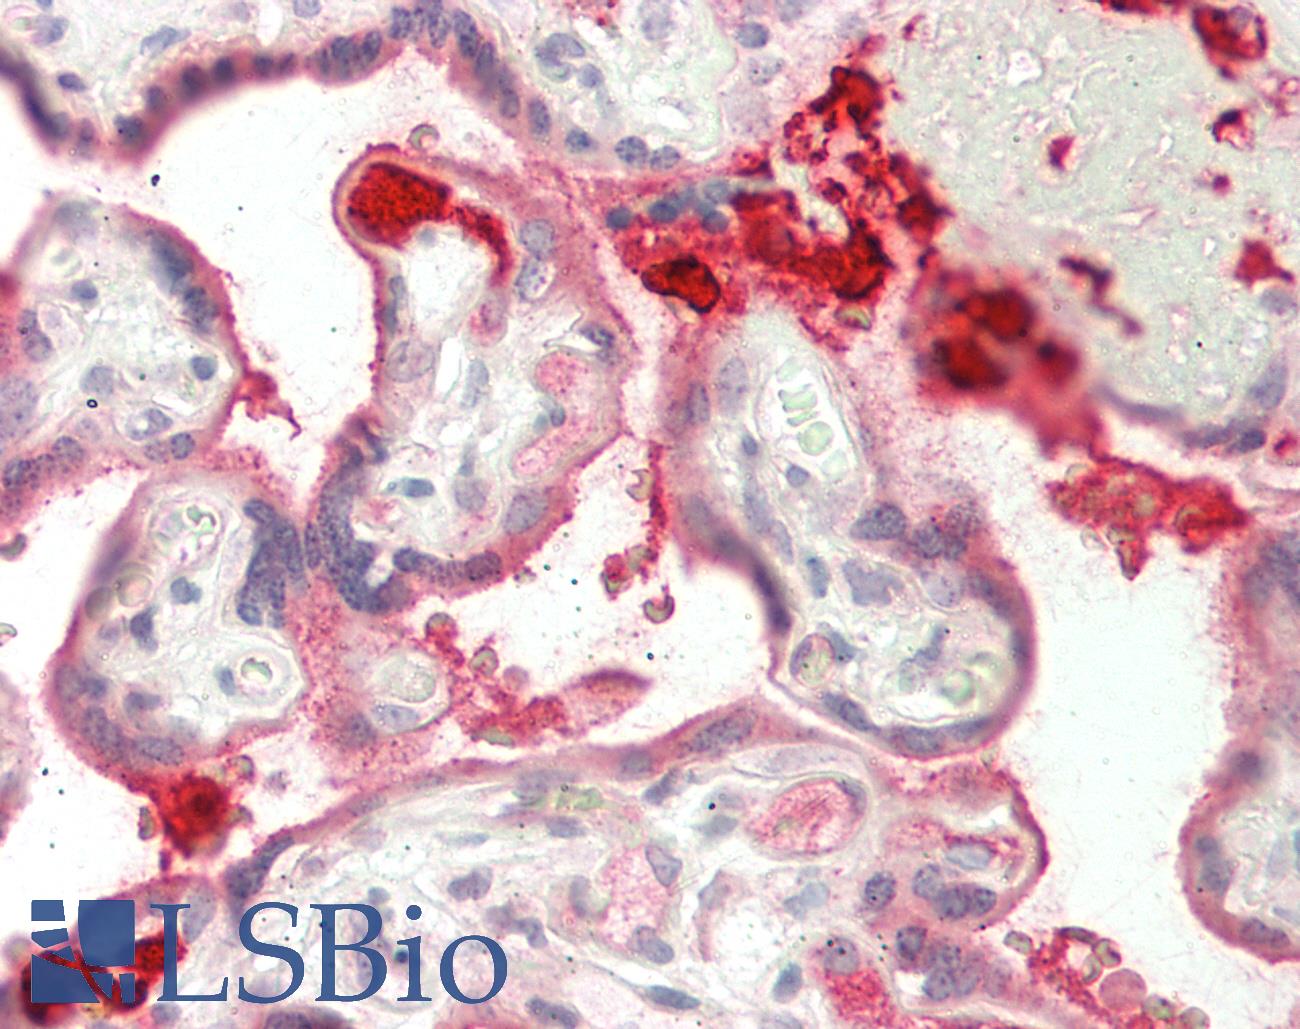 PECAM-1 / CD31 Antibody - Human Placenta: Formalin-Fixed, Paraffin-Embedded (FFPE)